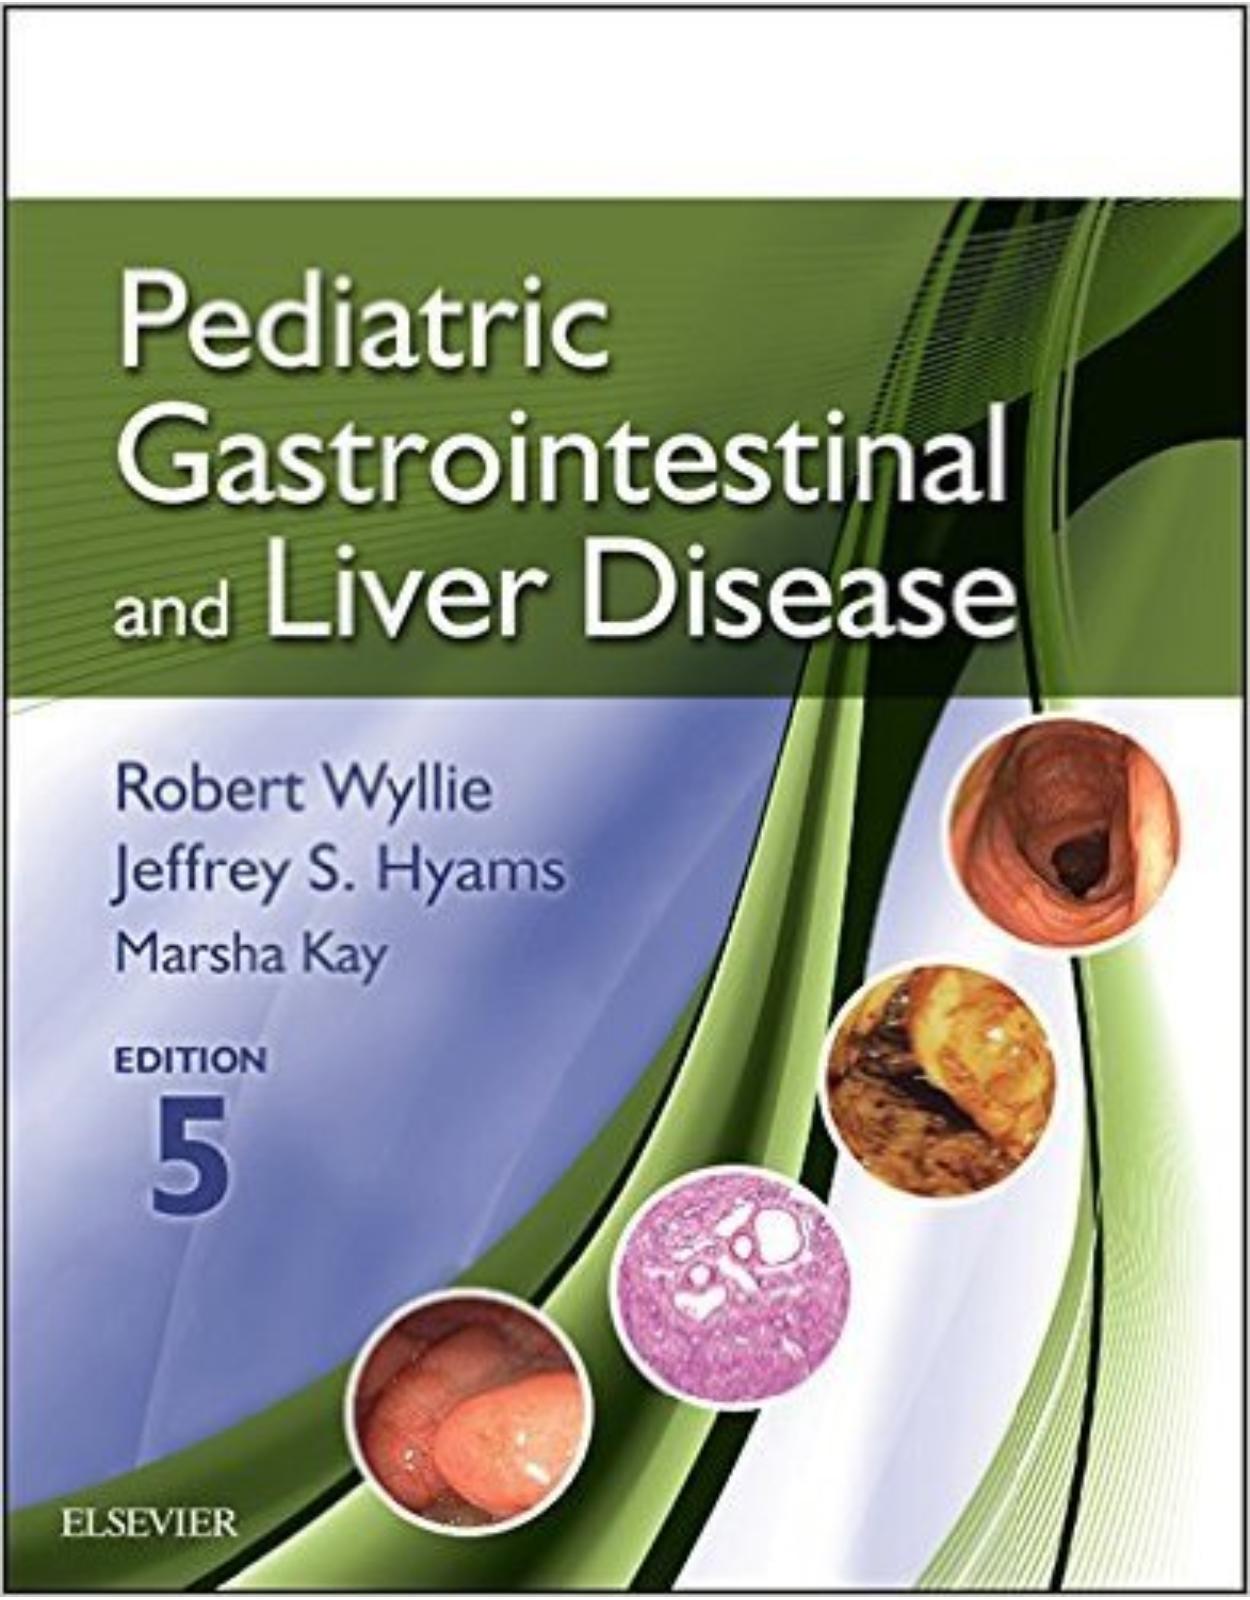 Pediatric Gastrointestinal and Liver Disease, 5e Edition